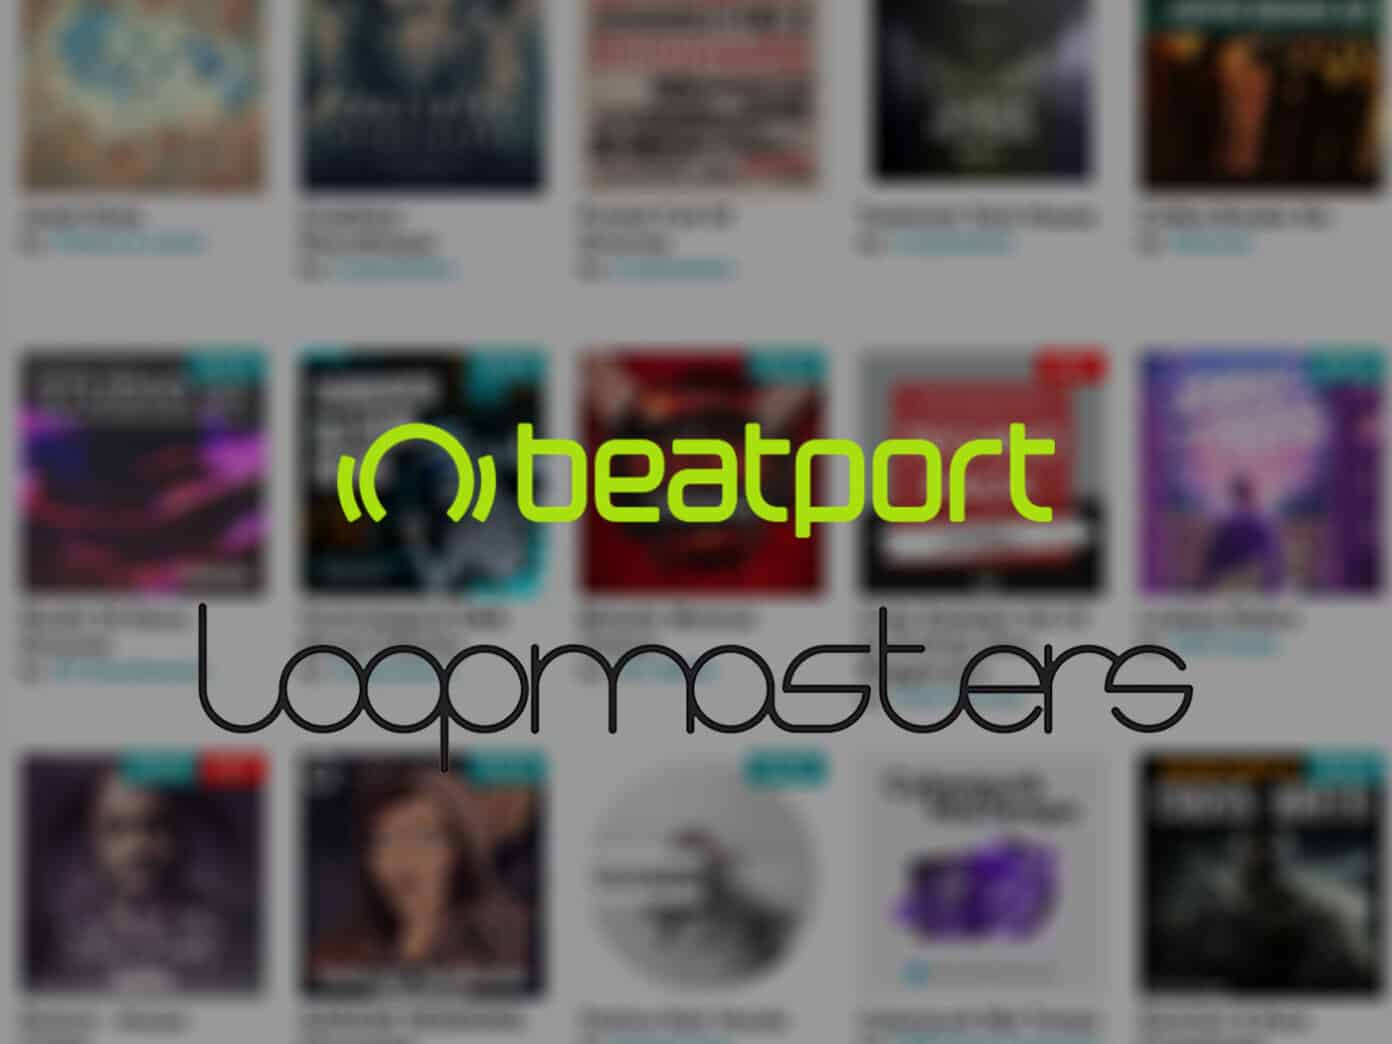 Beatport Loopmasters